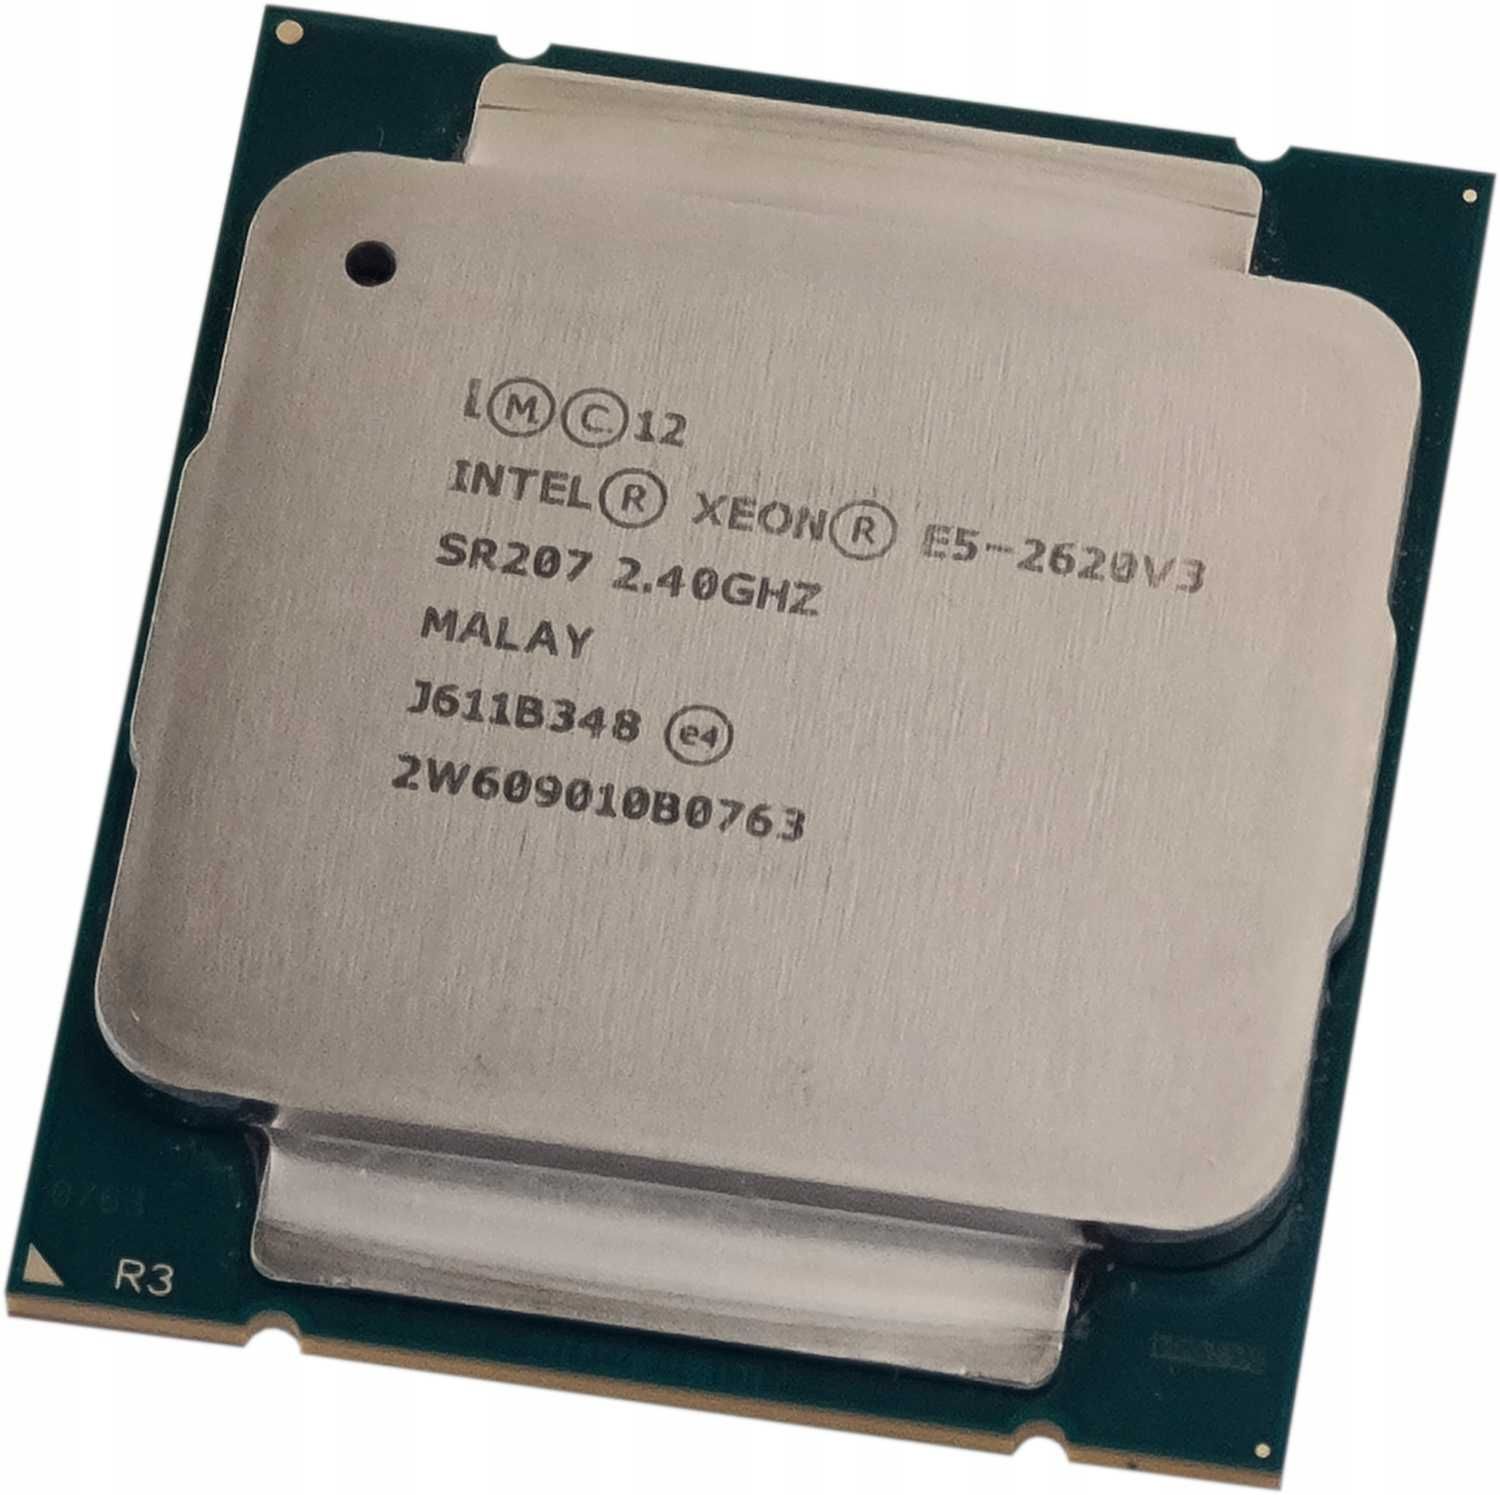 Procesor Intel Xeon E5-2620 v3 SR207 LGA2011-3. Do gier.